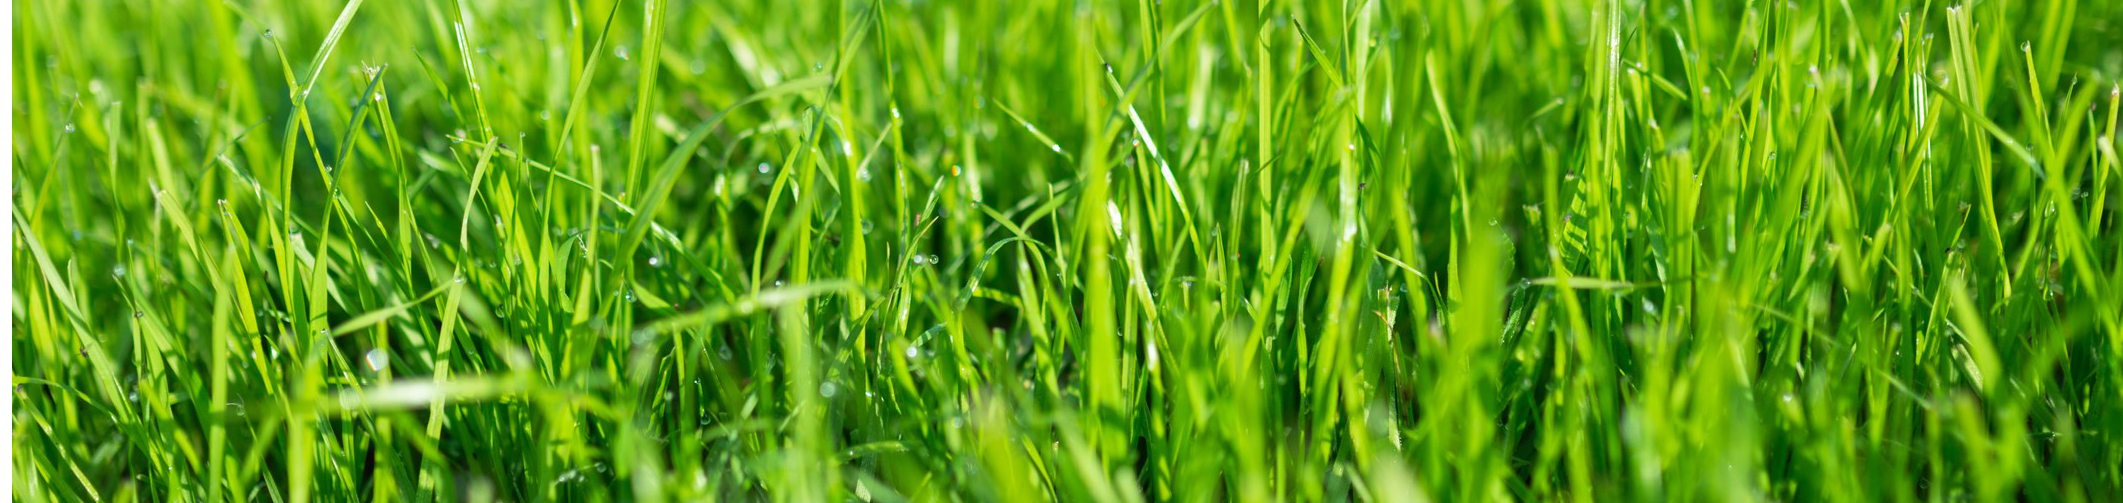 Closeup photo of lawn grasses